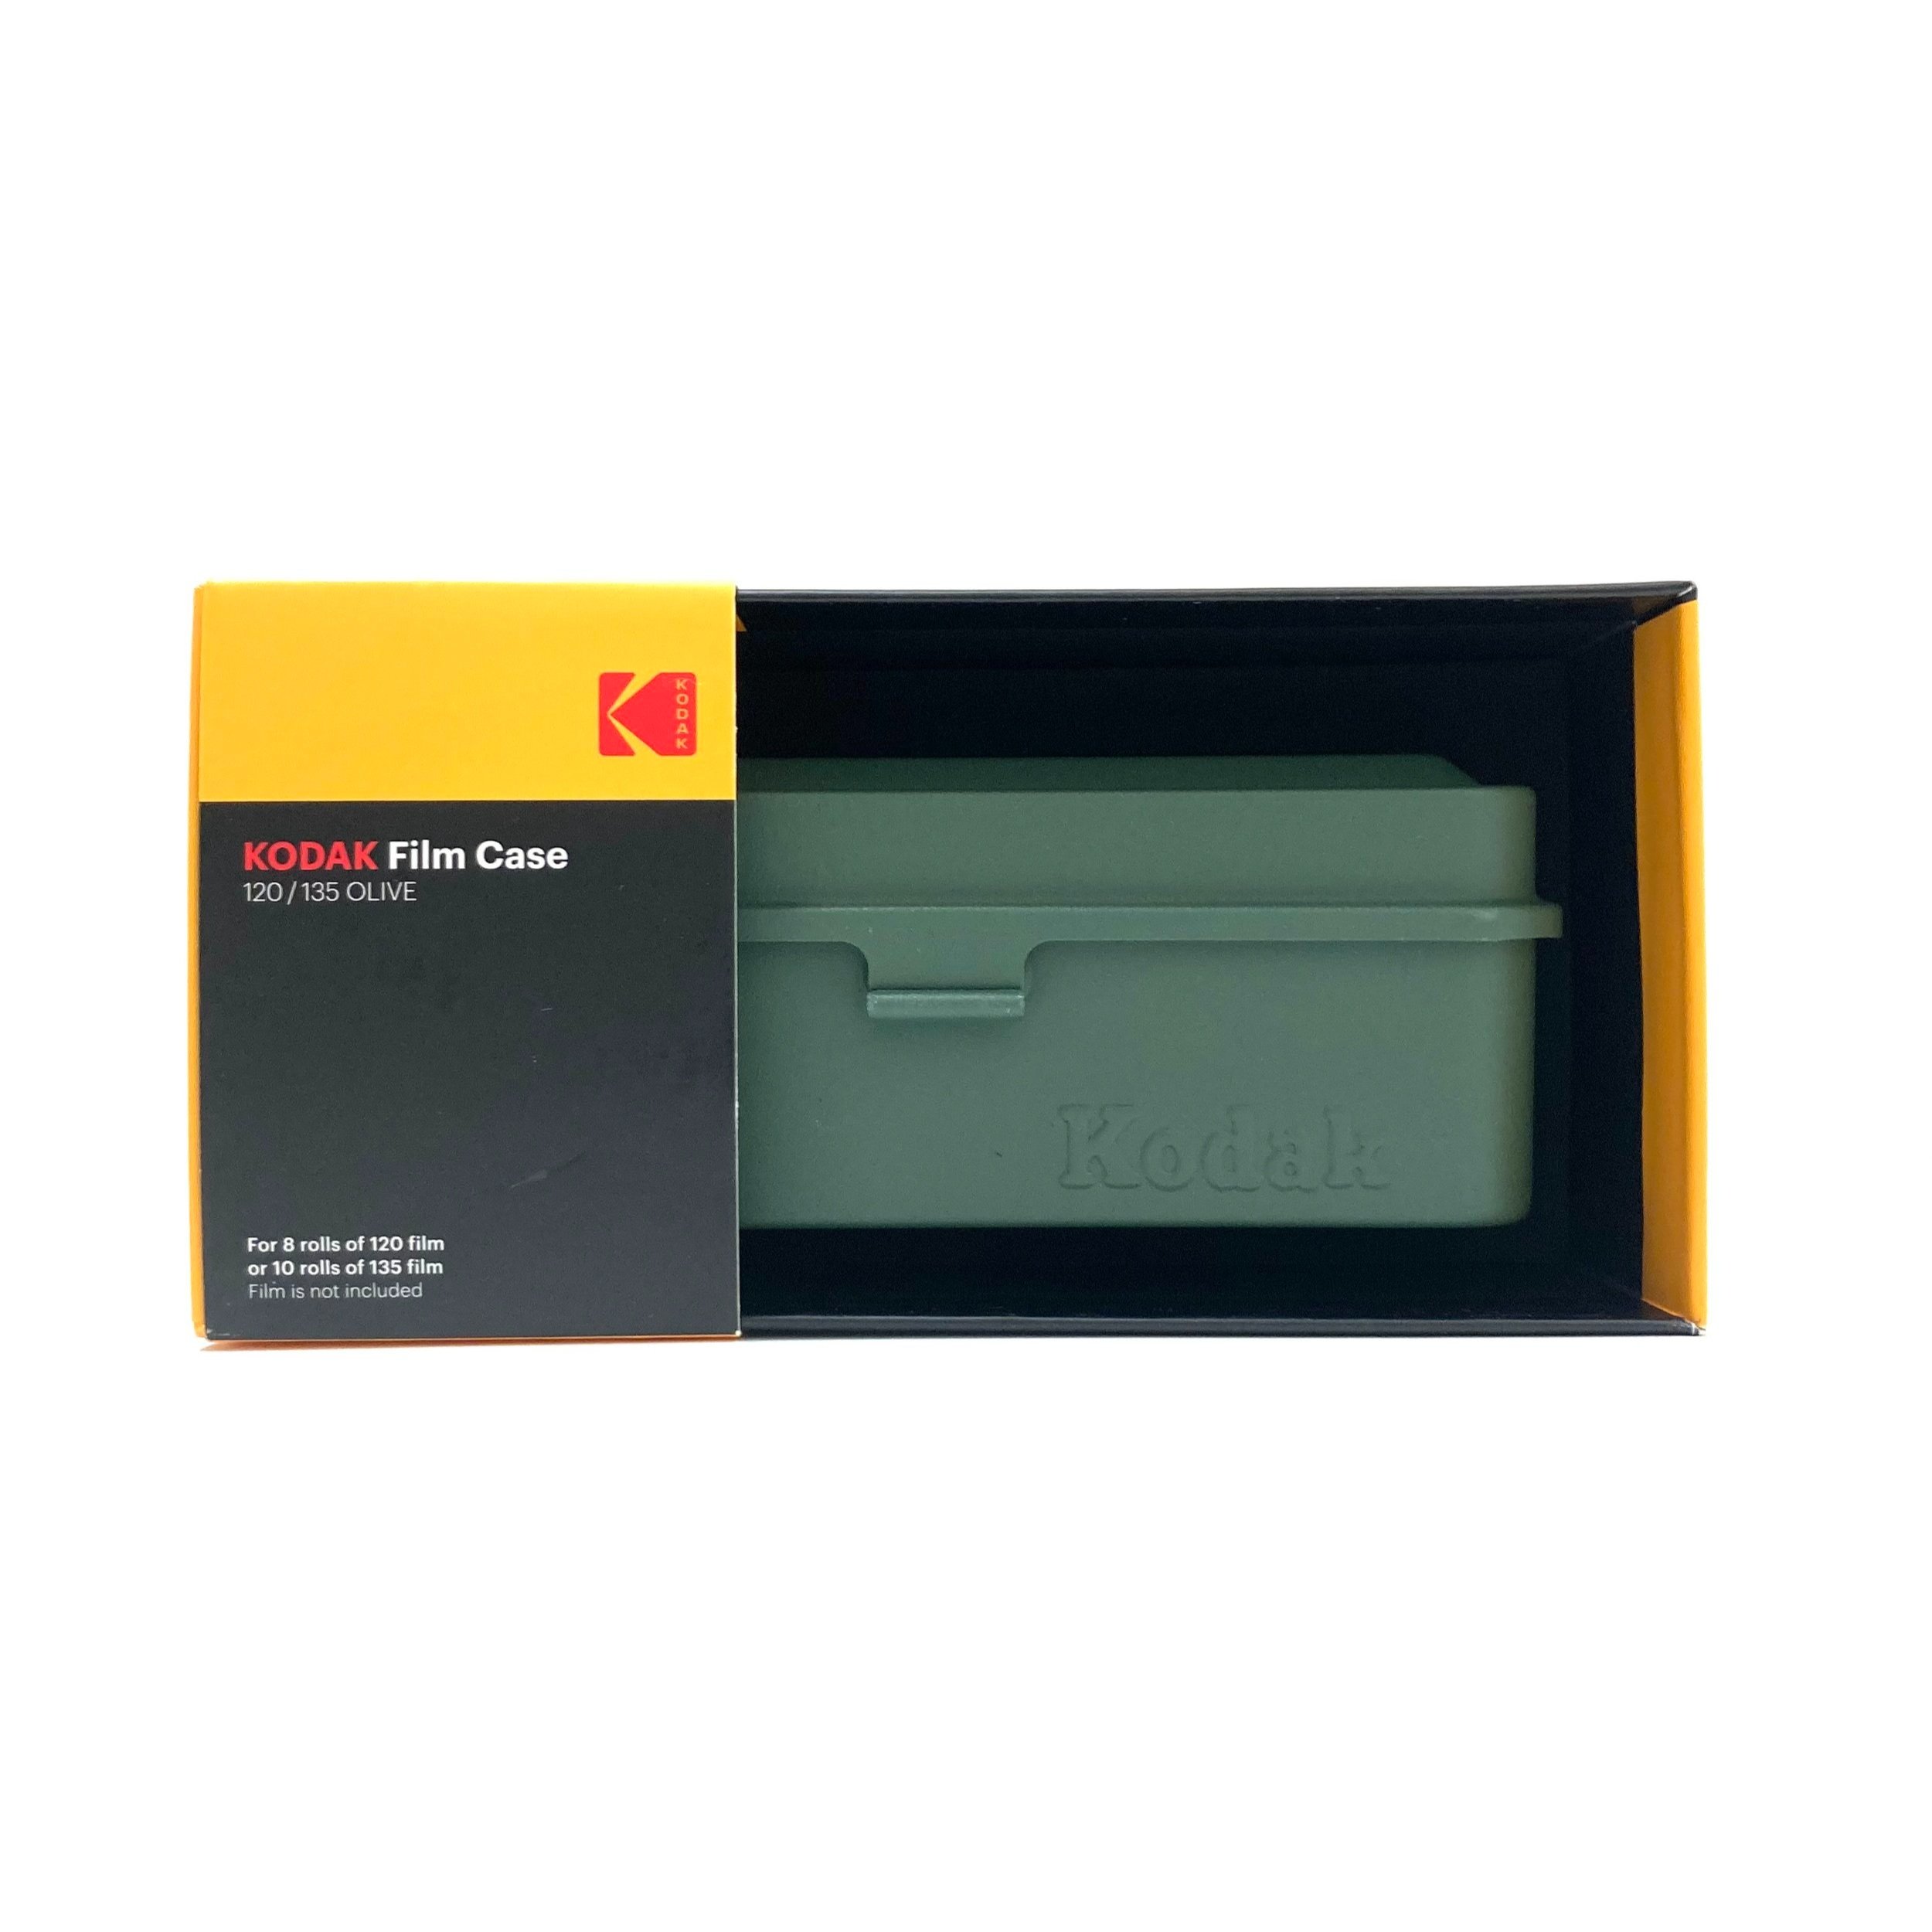 Kodak Film Case 120/135 — Photographique